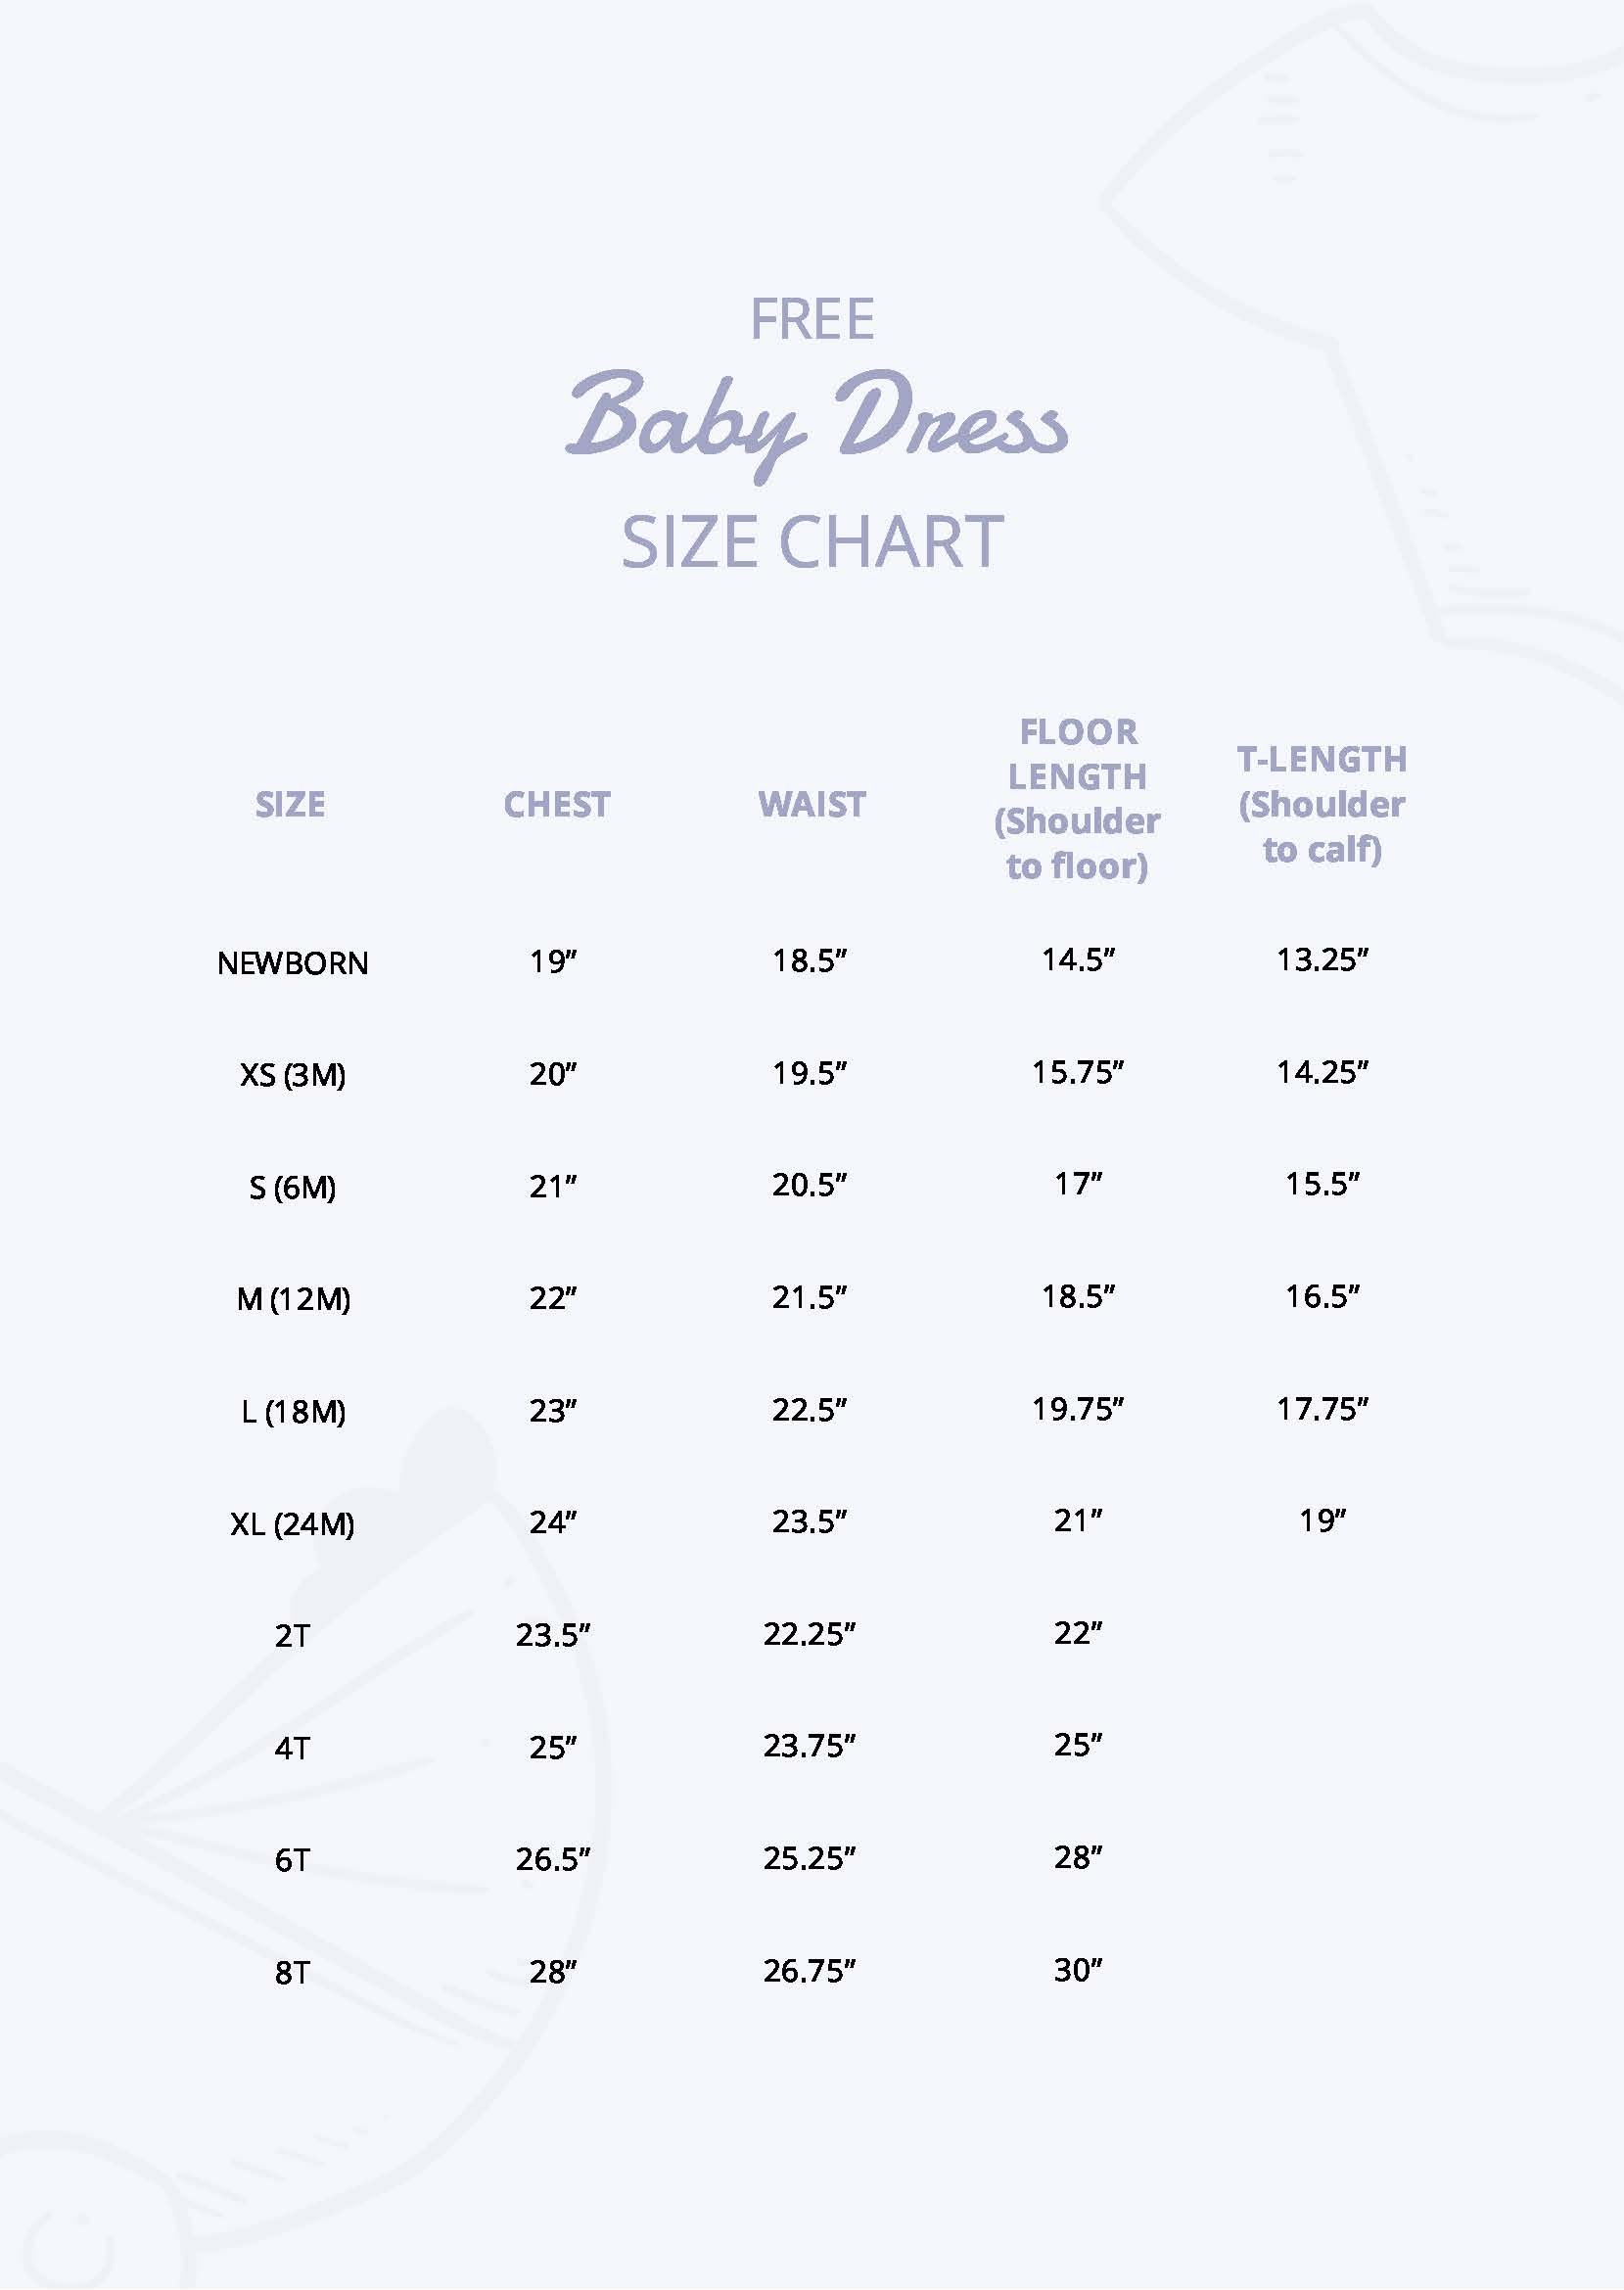 Baby Dress Size Chart in PDF